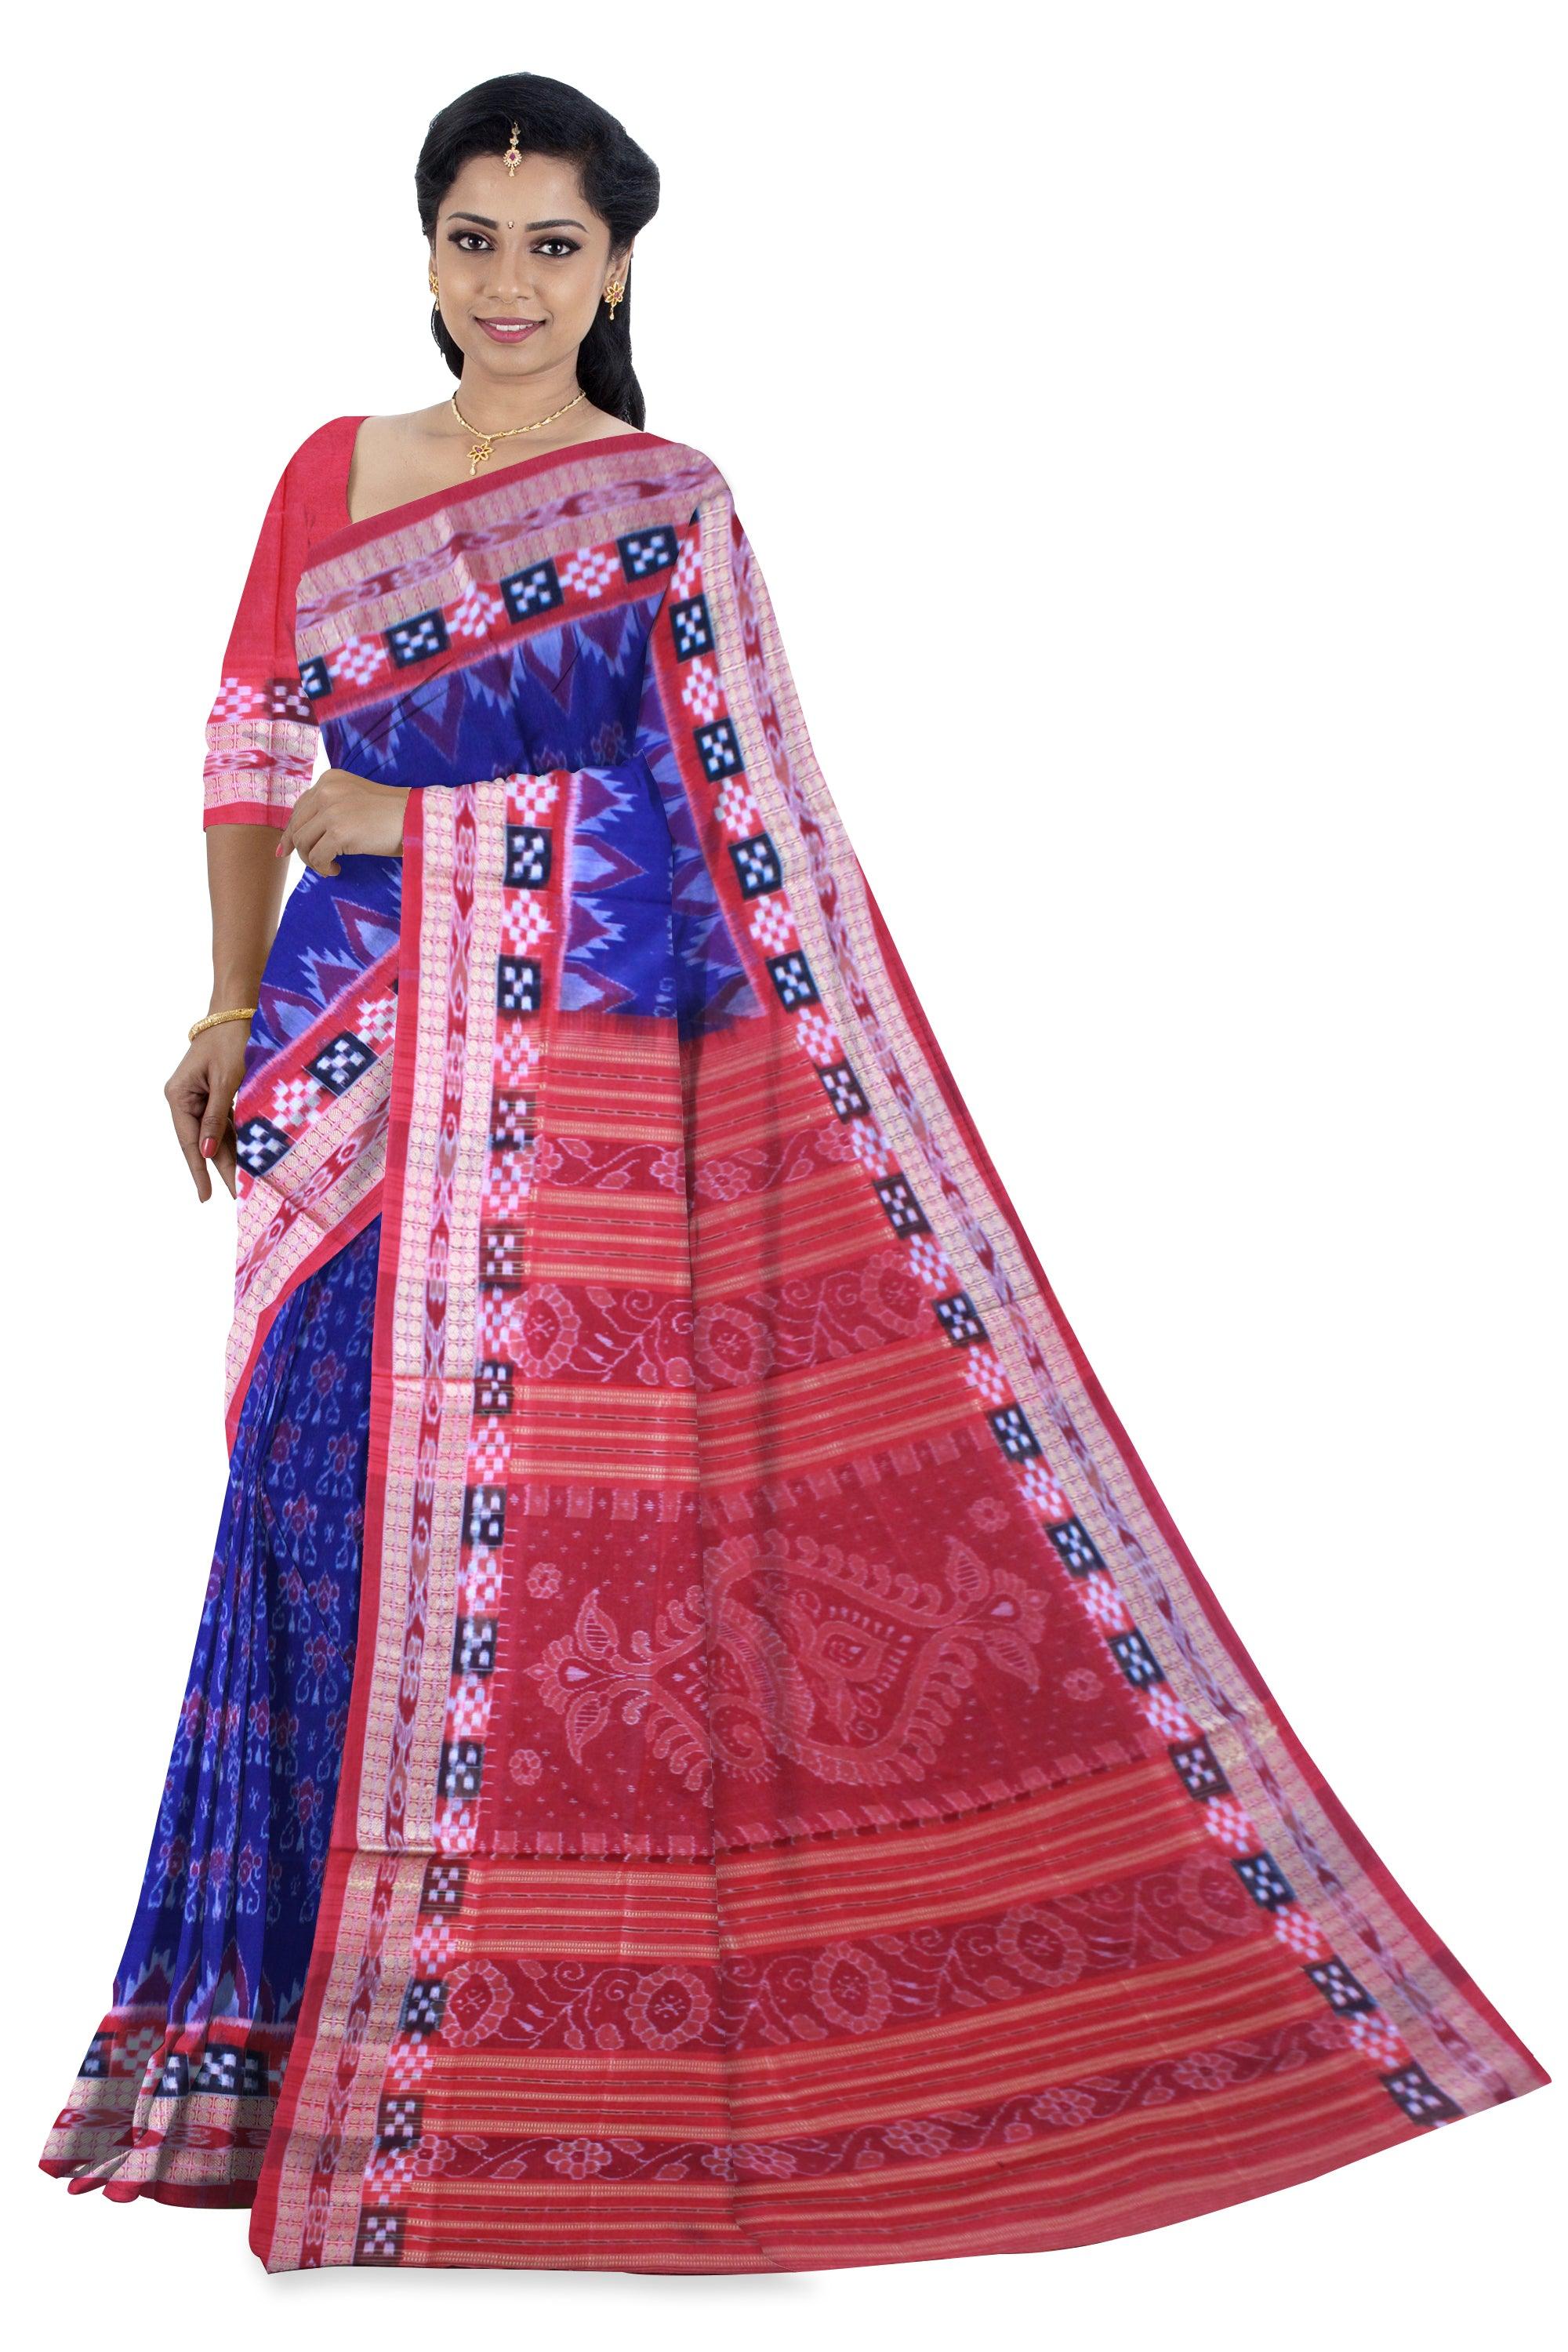 Latest Design Dhadi Sapta in Blue color traditional pasapali pattern Sambalpuri cotton Saree - Koshali Arts & Crafts Enterprise